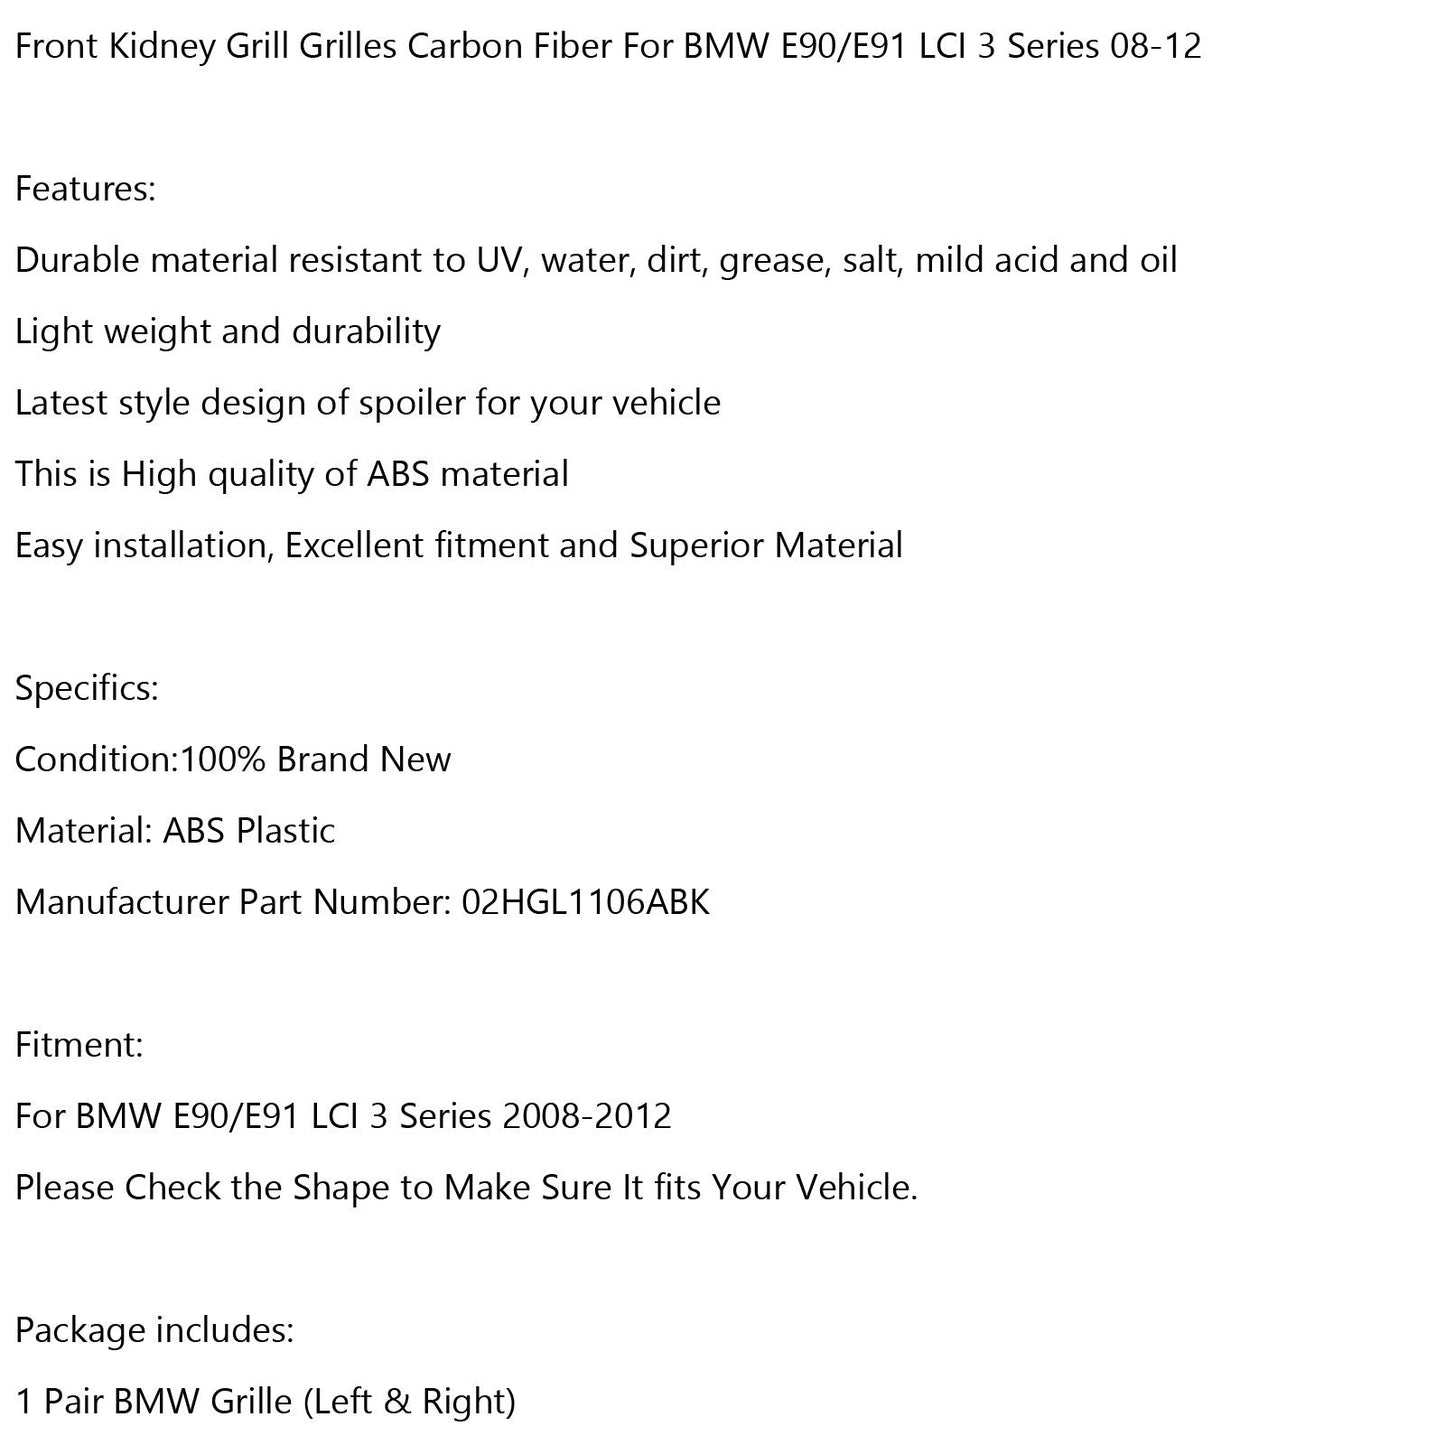 2008-2012 BMW E90/E91 LCI 3 Series Front Kidney Grill Grilles Carbon Fiber 02HGL1106ABK